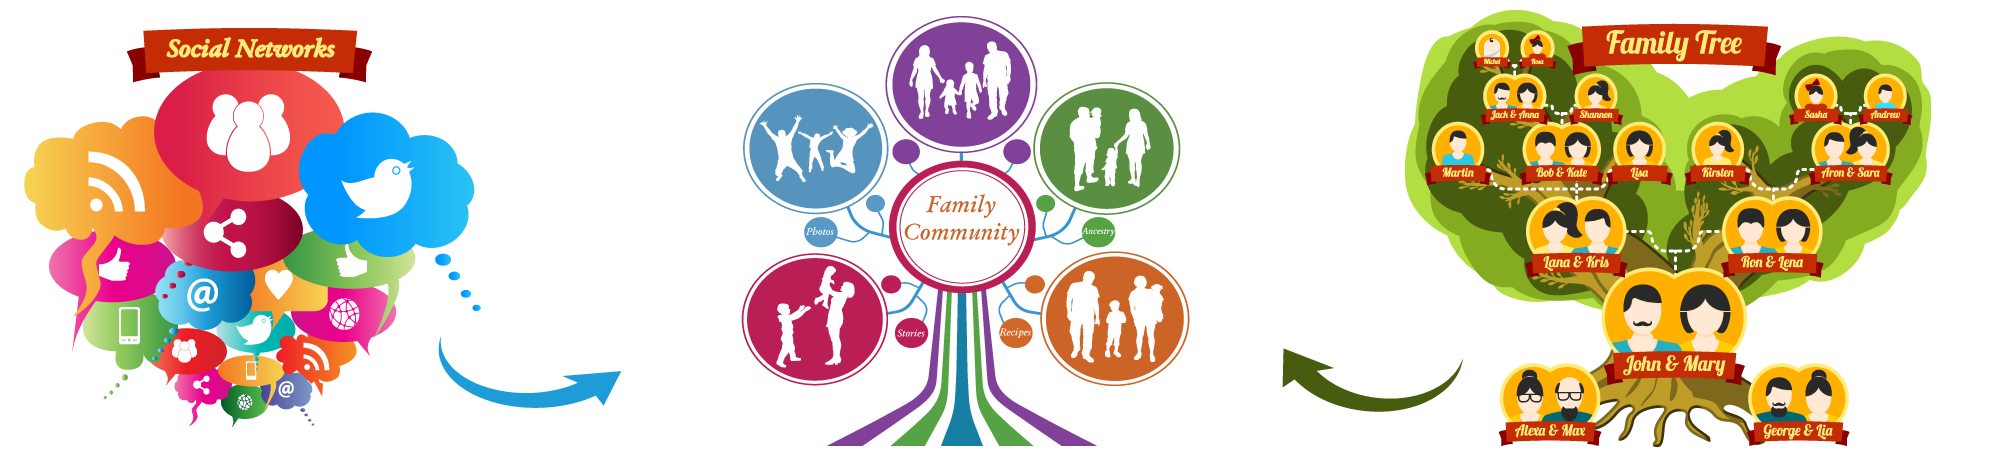 Social Networks Meet Family Trees